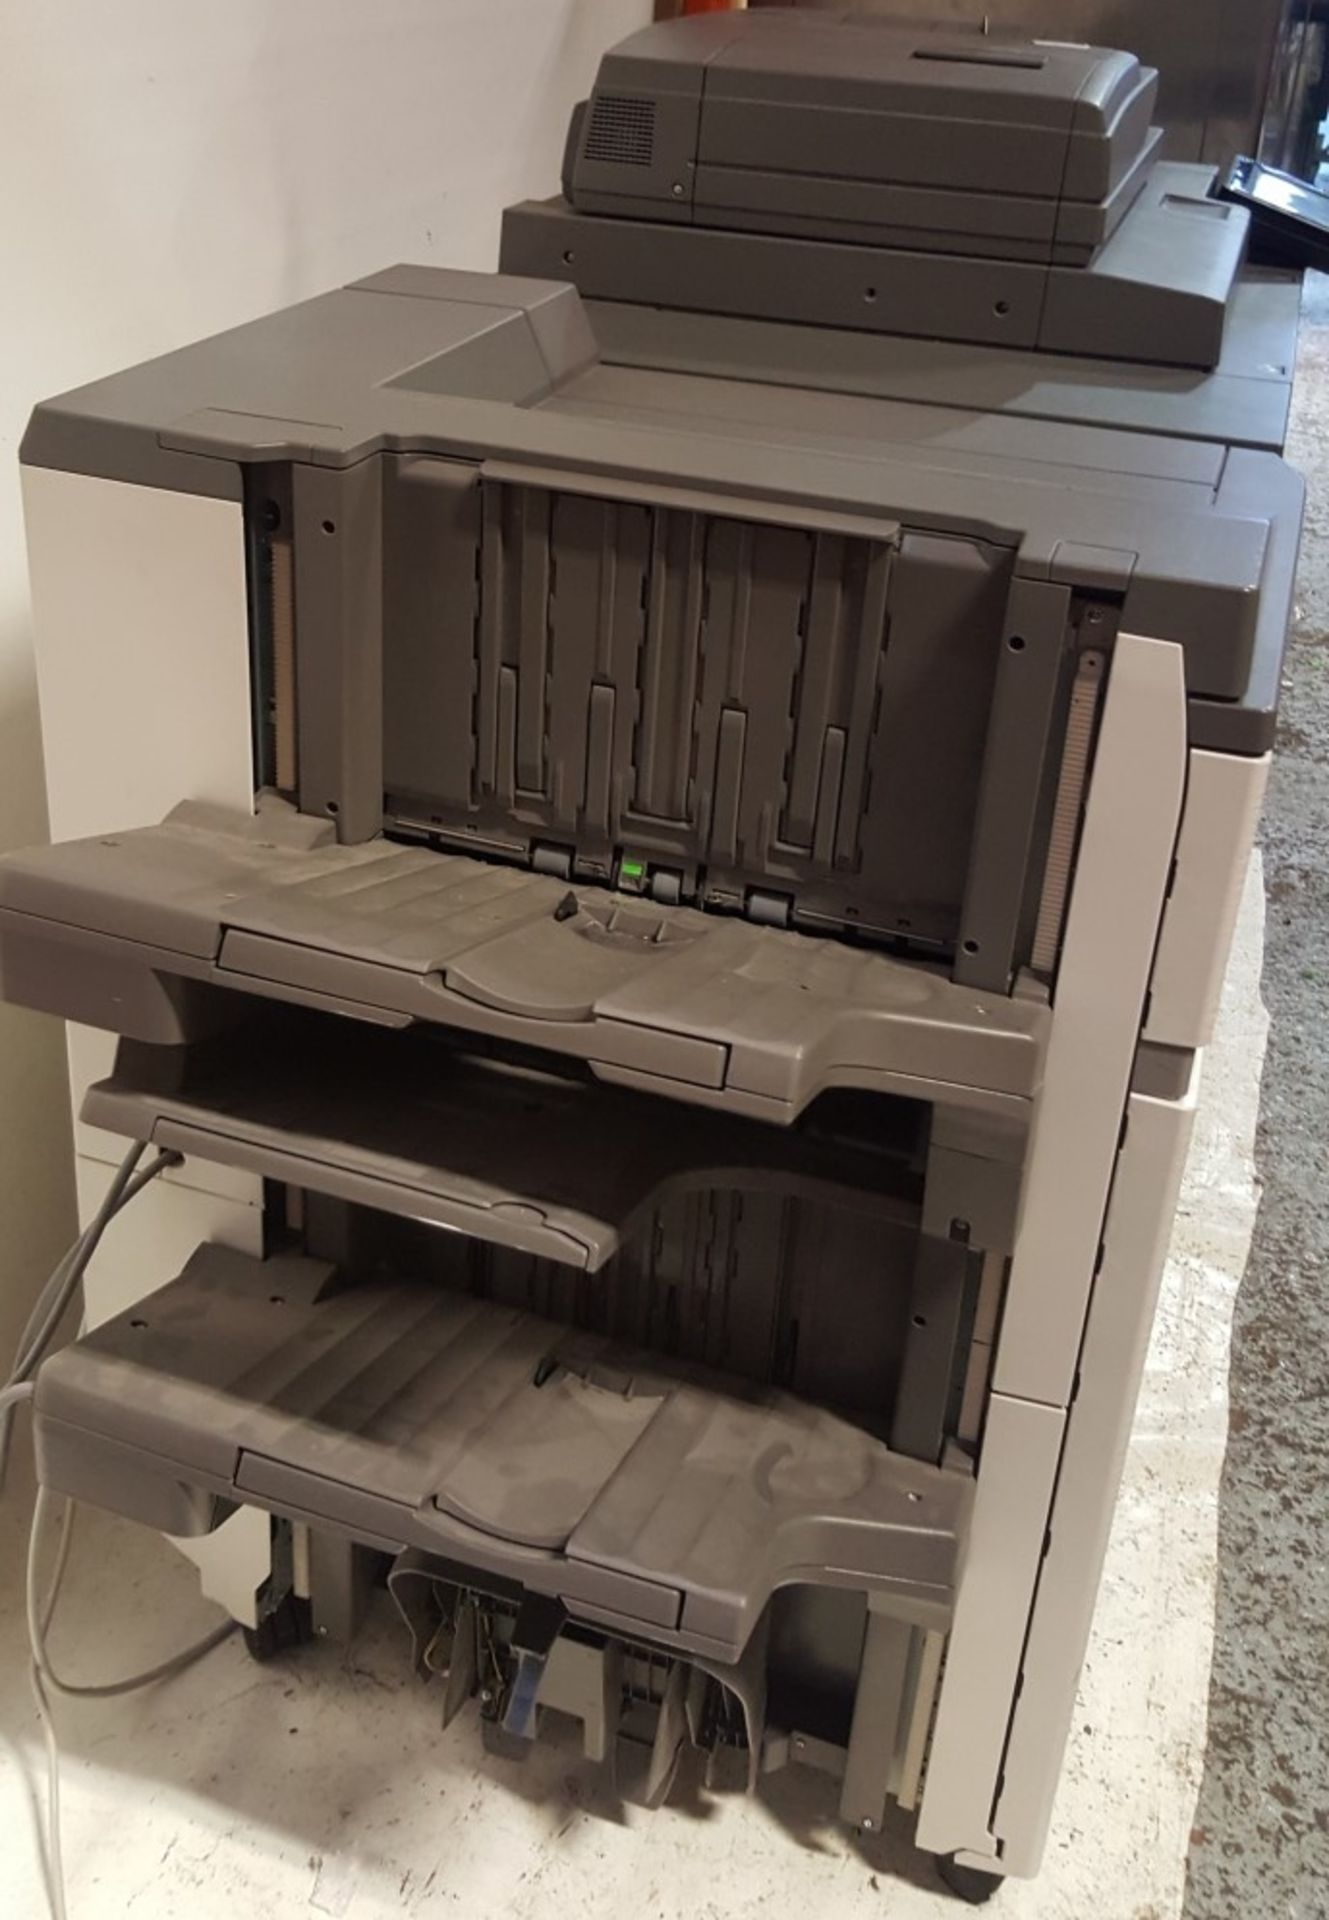 1 x Sharp MX6240N Office Photocopier Printer With Saddle Stitch Finisher & Curl Correction Unit - - Image 9 of 9